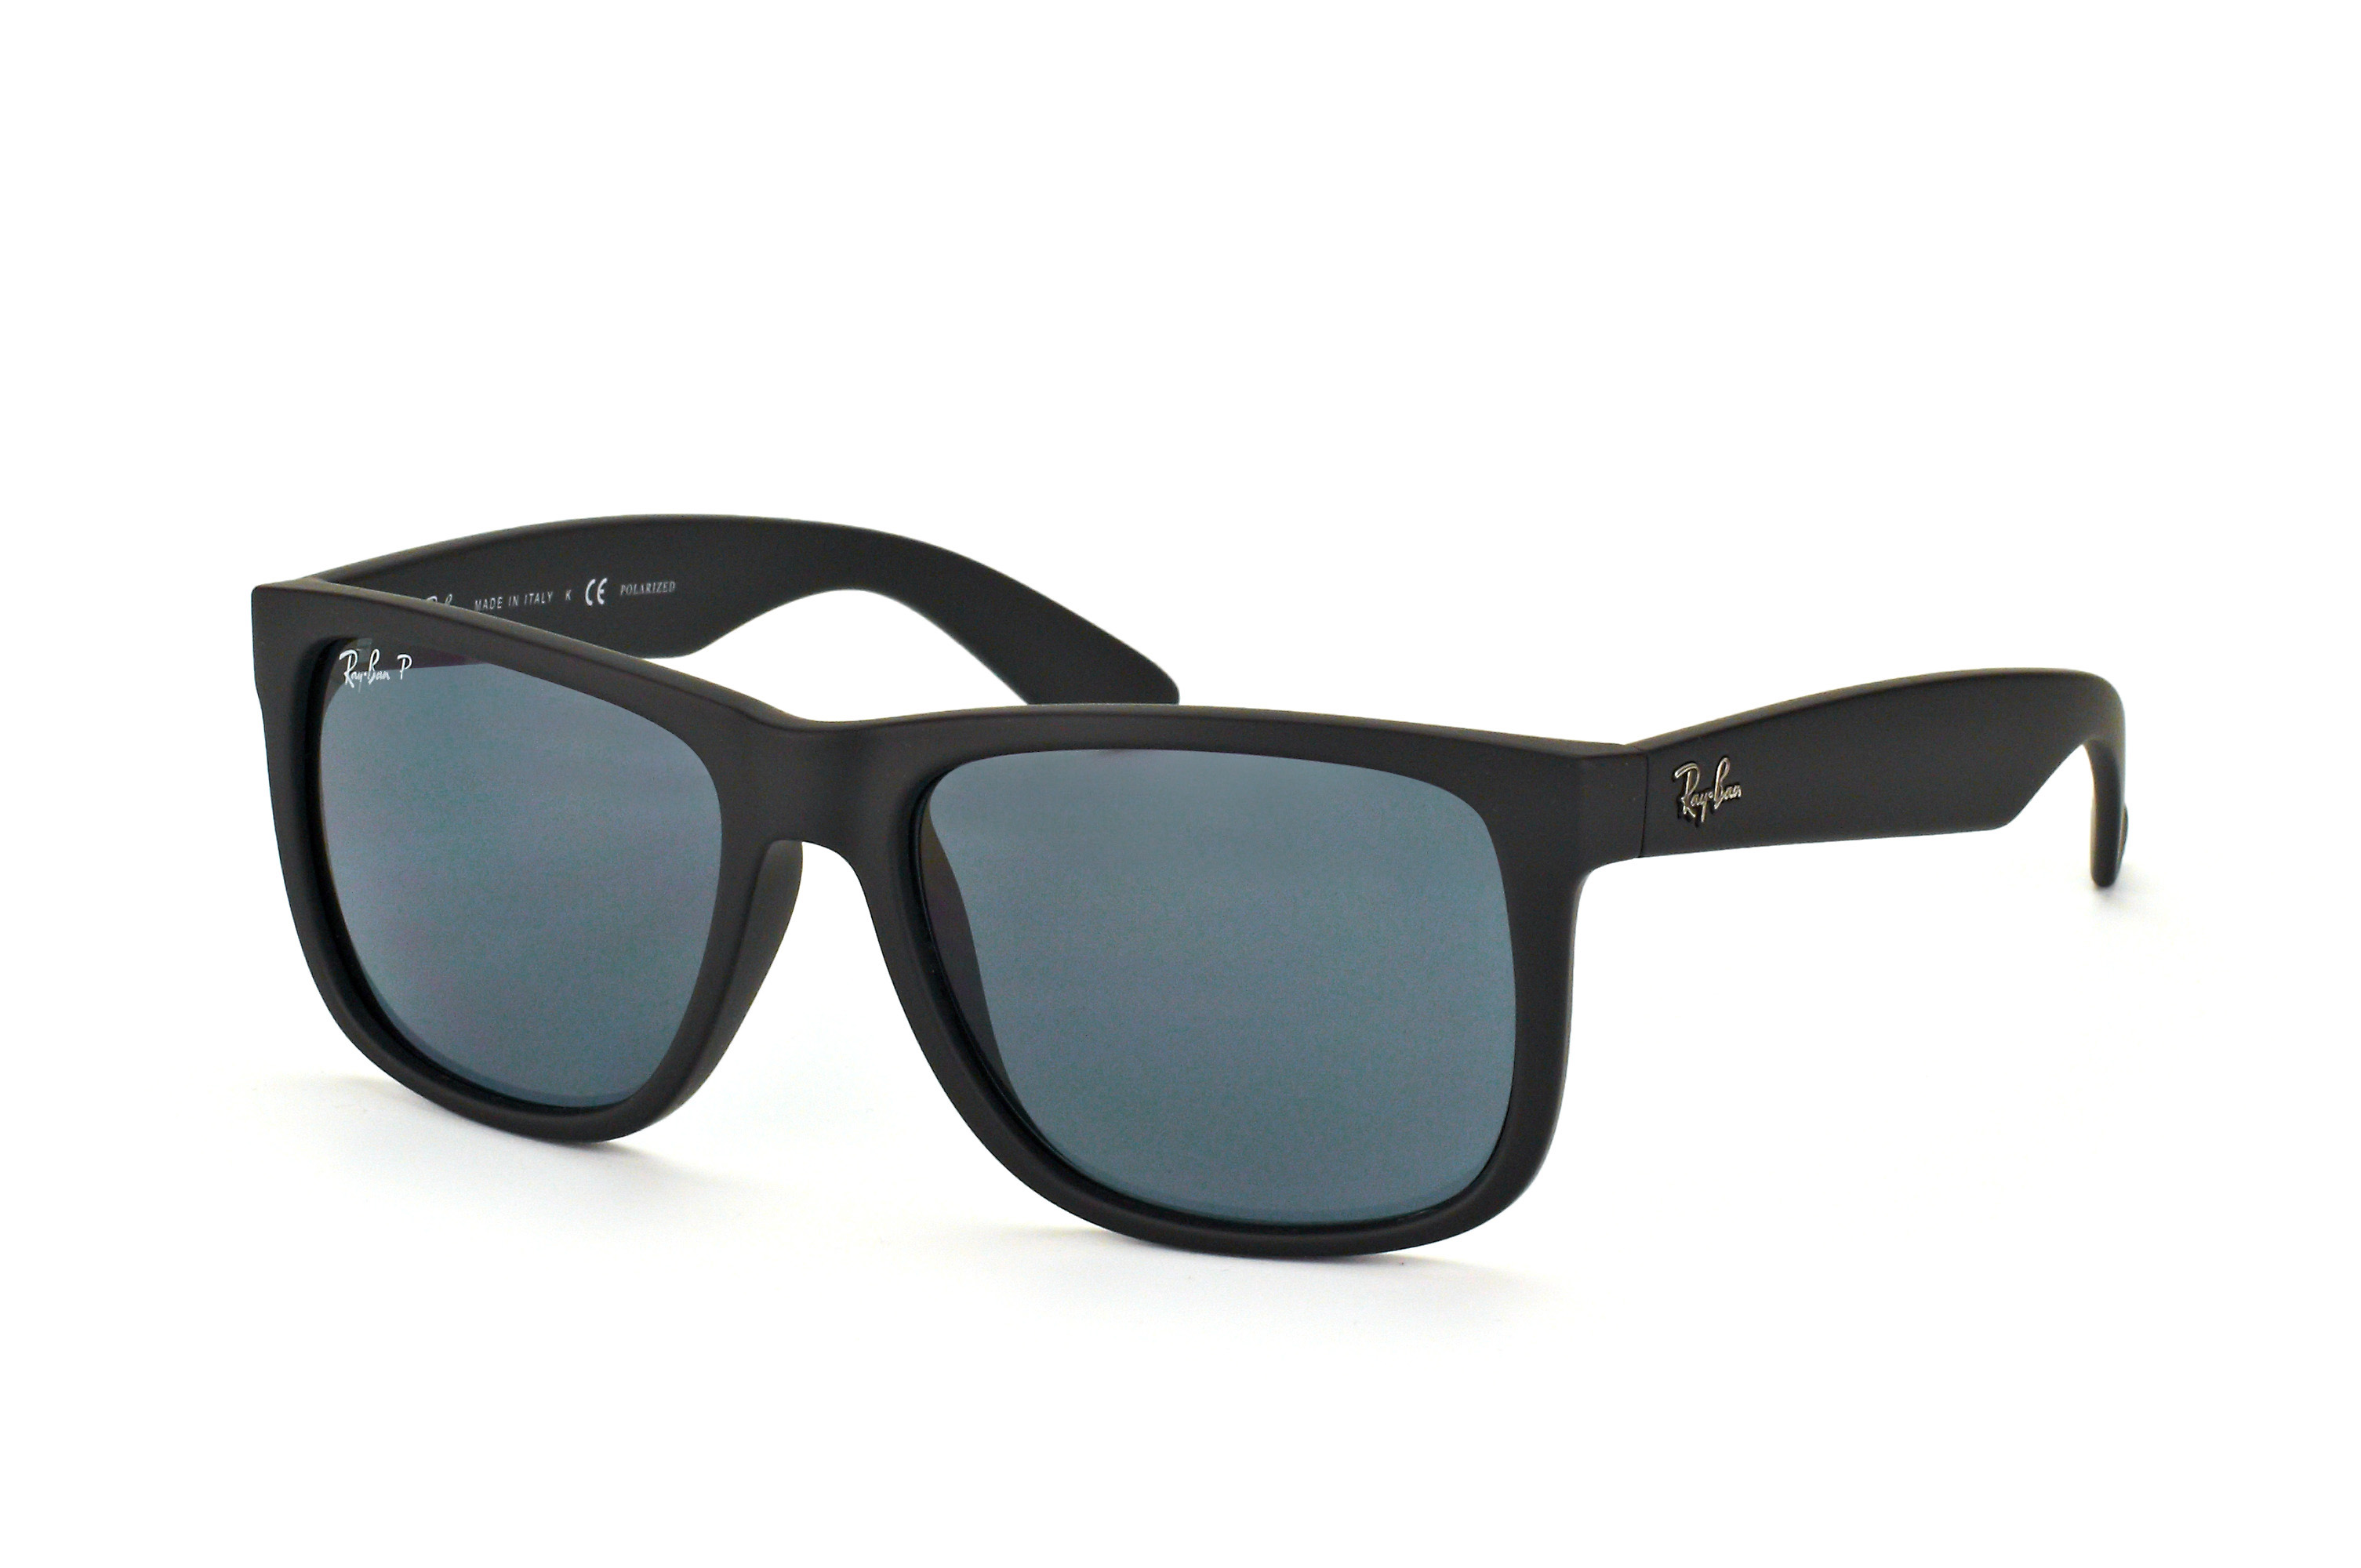 Buy Ray-Ban Justin RB 4165 622/2V Sunglasses